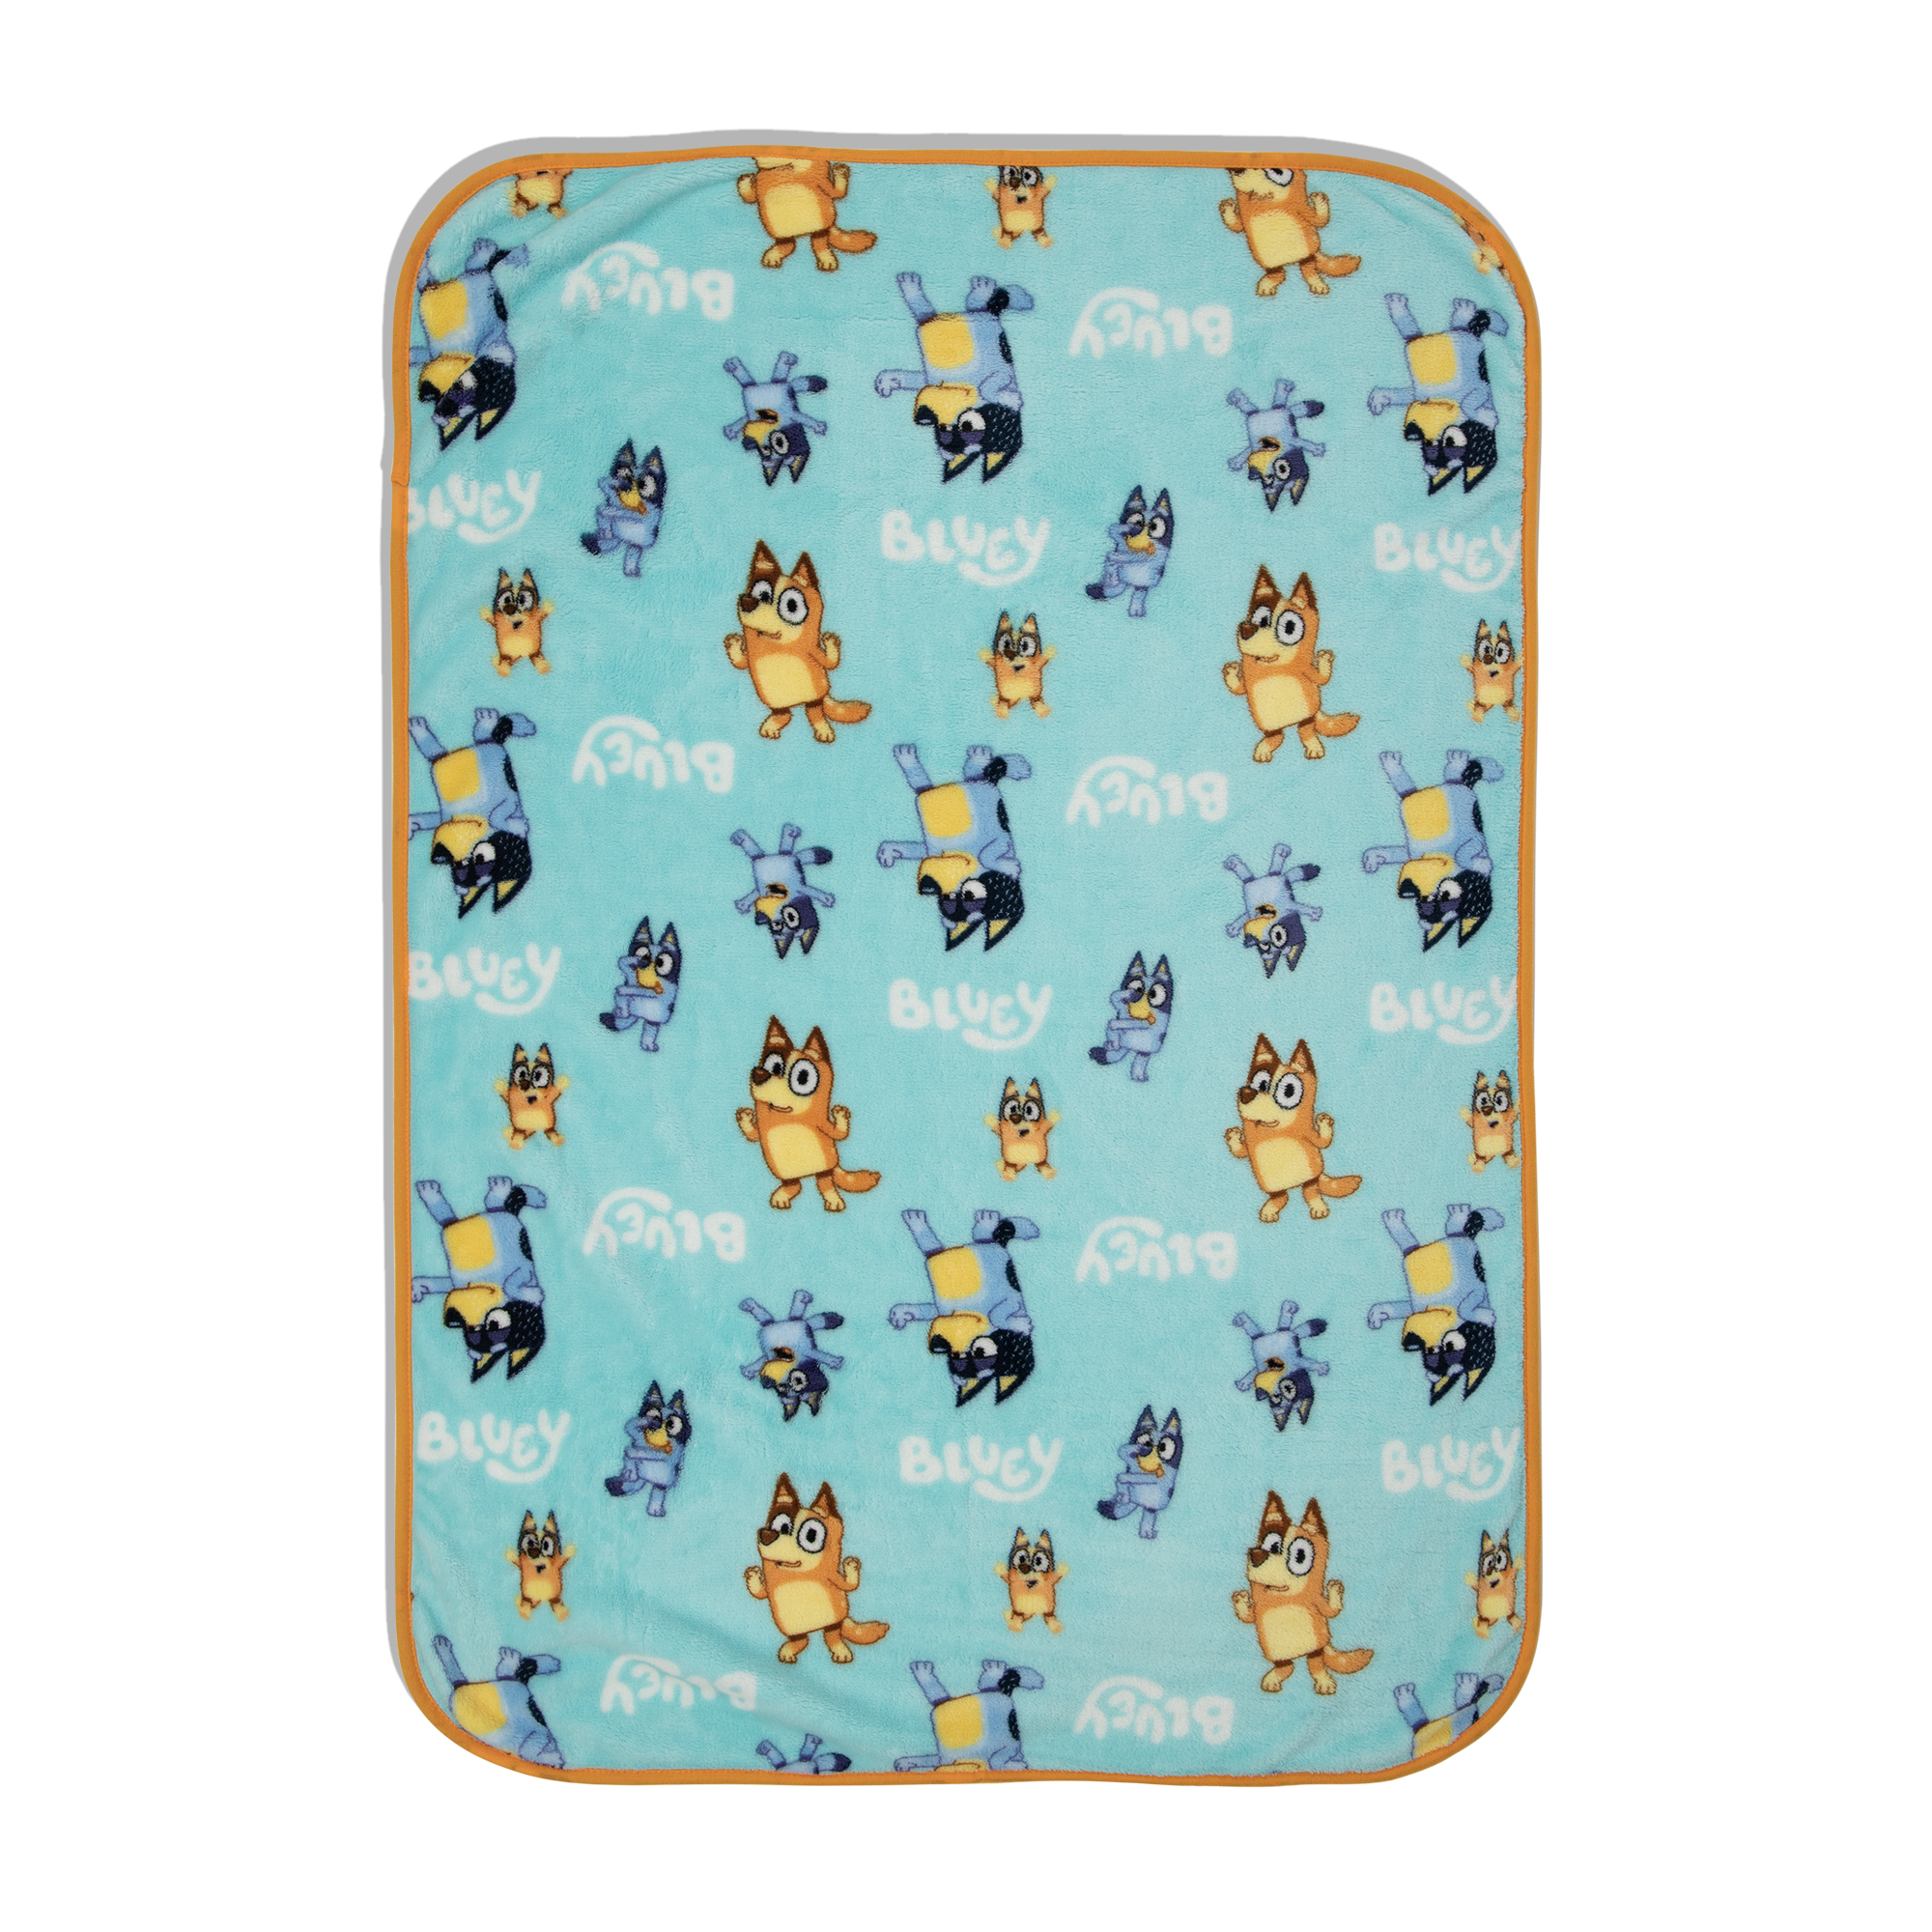 Bluey Toddler 5pc Bedding Set with Blanket - Blue - image 5 of 9